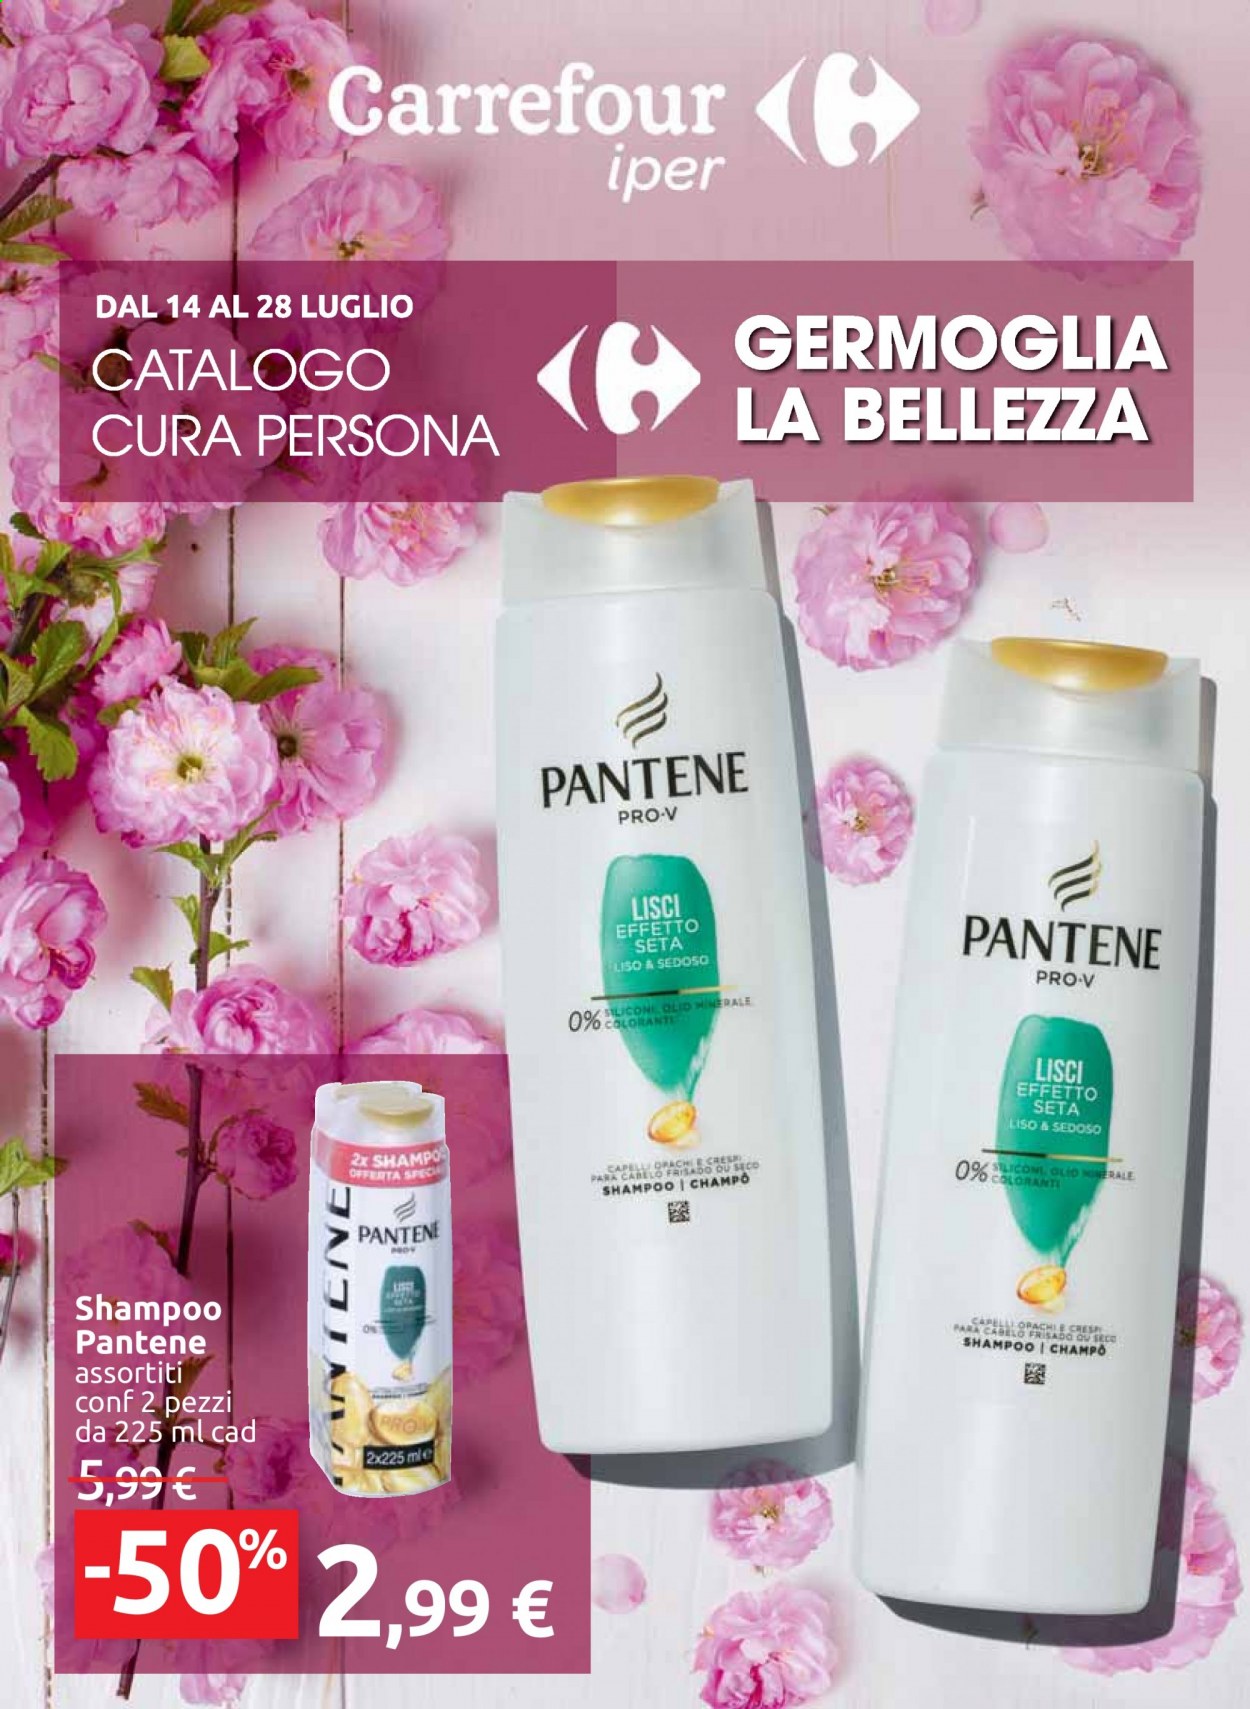 thumbnail - Volantino Carrefour - 14/7/2021 - 28/7/2021 - Prodotti in offerta - shampoo, Pantene. Pagina 1.